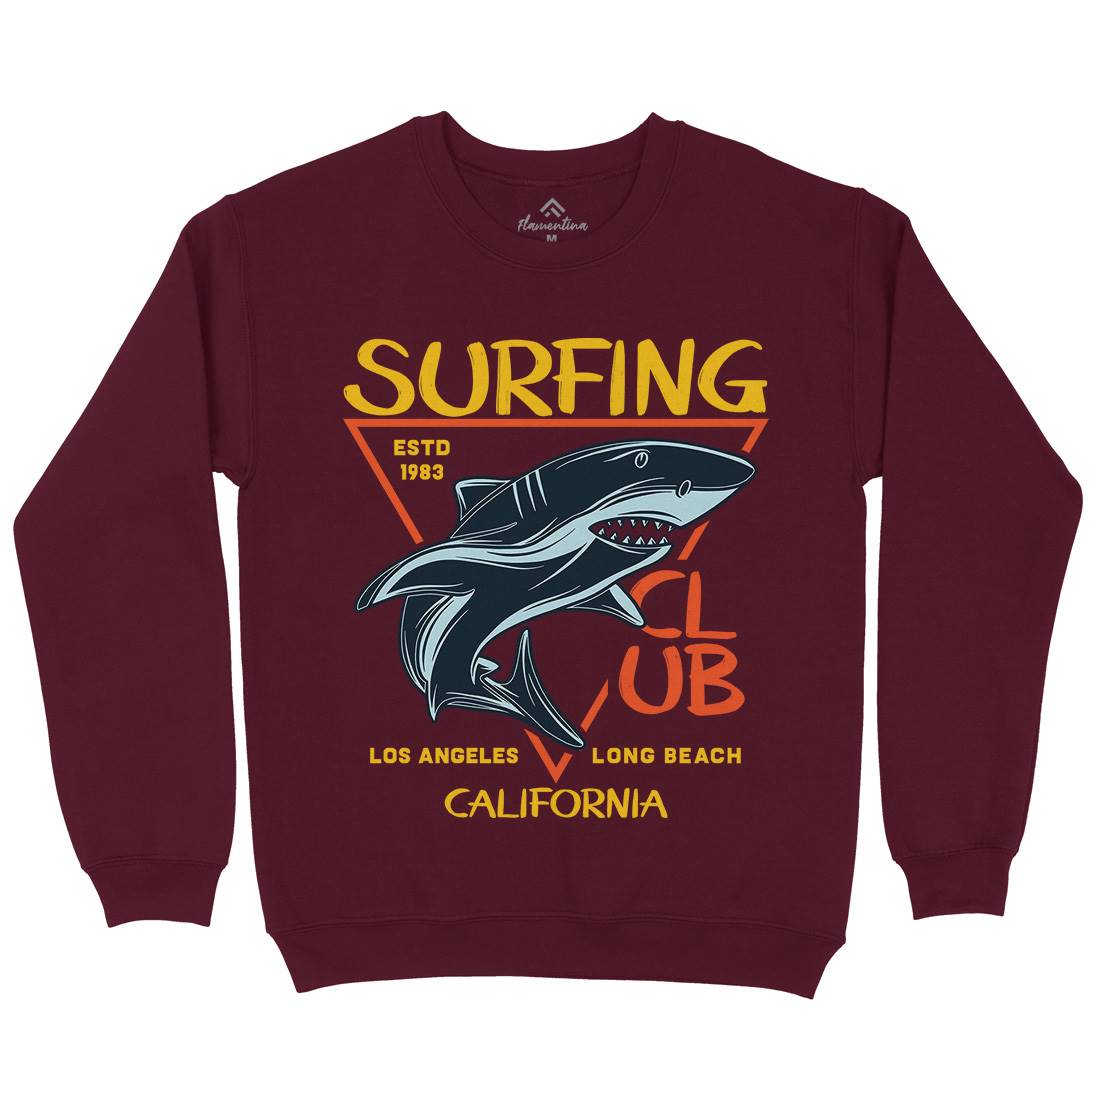 Shark Surfing Club Mens Crew Neck Sweatshirt Navy D968